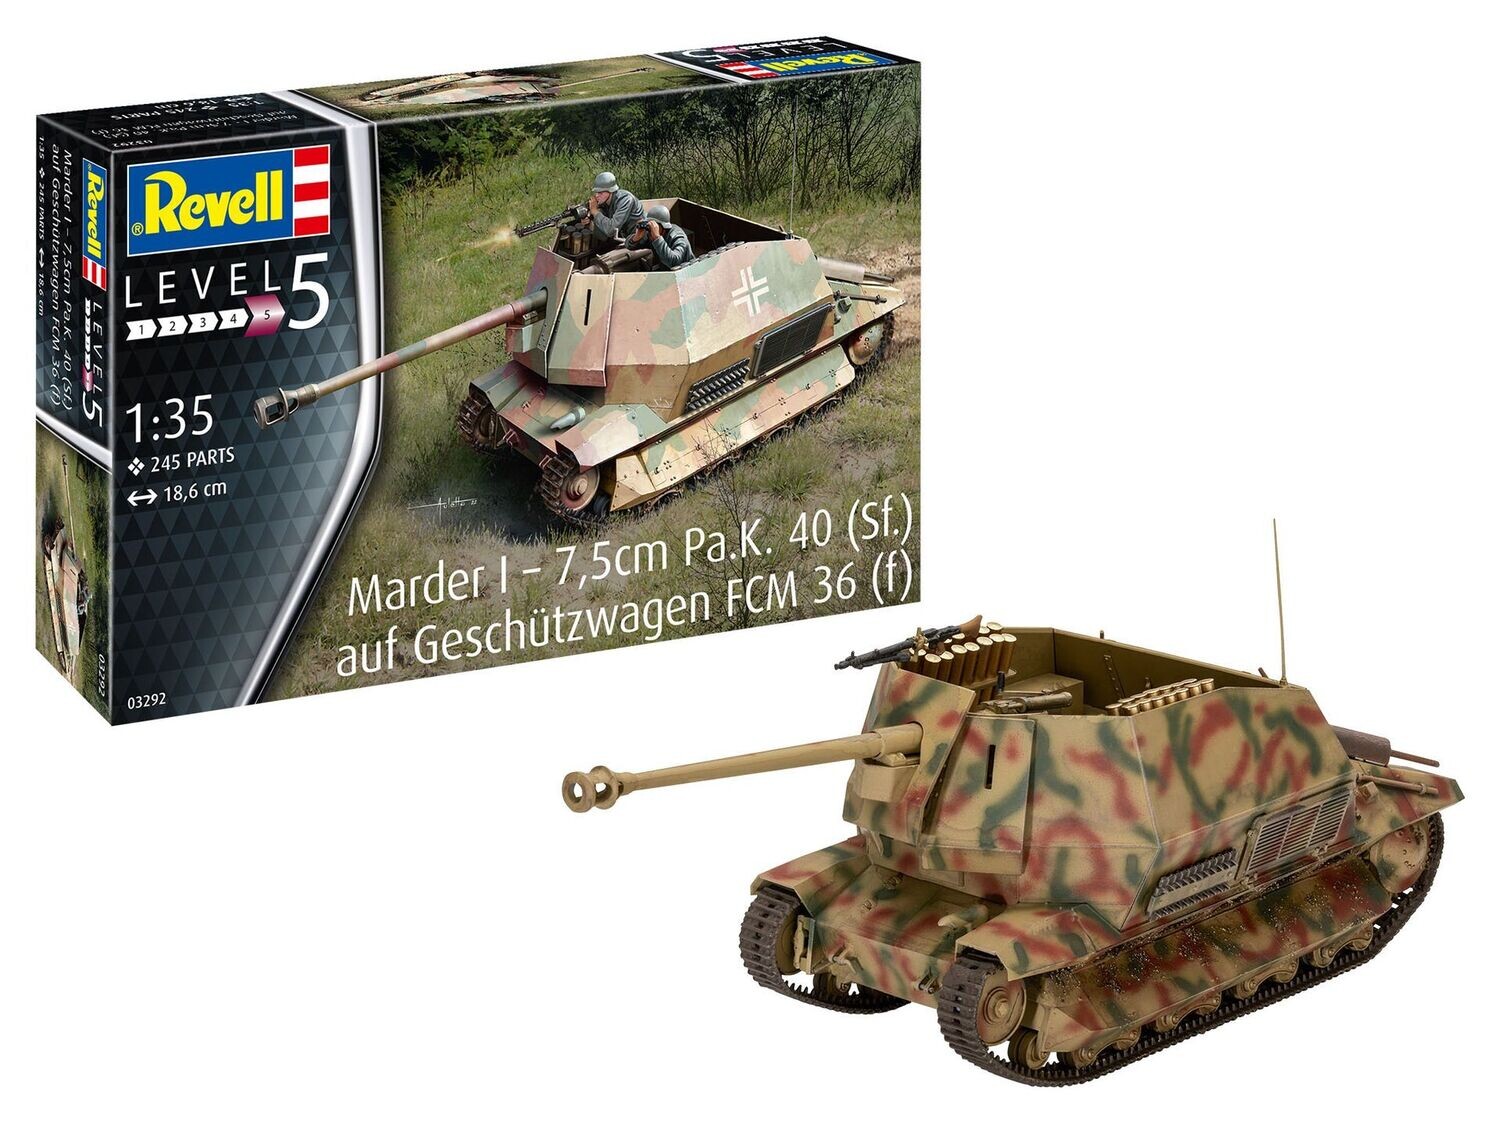 Revell 03292 Marder I 7,5cm Pa.K. 40 (Sf.) auf Geschützwagen FCM 36 (f) 1:35 Scale Plastic Model Kit